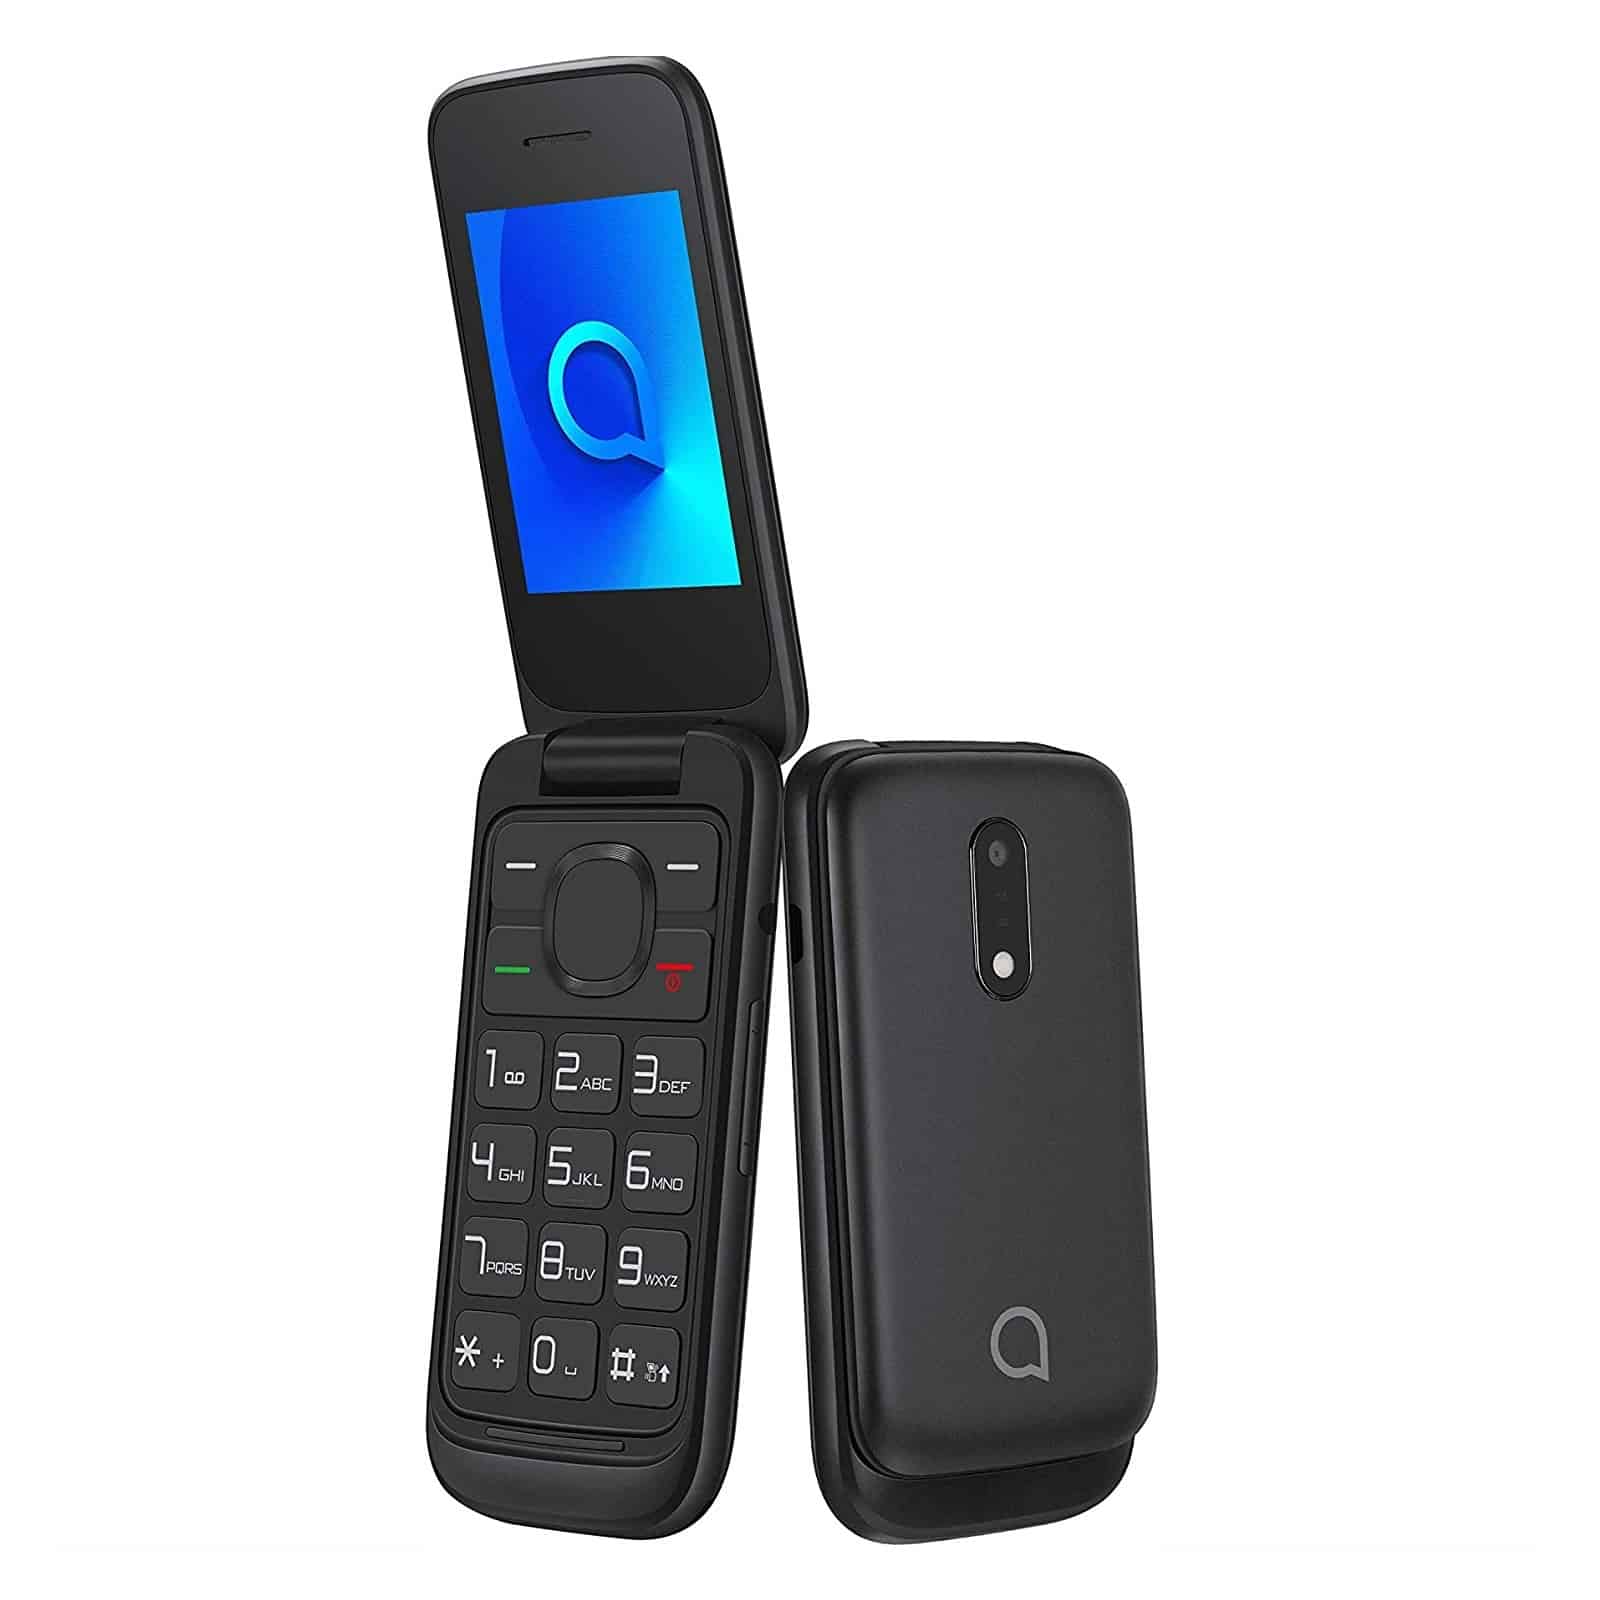 Gárgaras Barriga Abultar Alcatel 2053D Teléfono móvil para personas mayores - Abubu